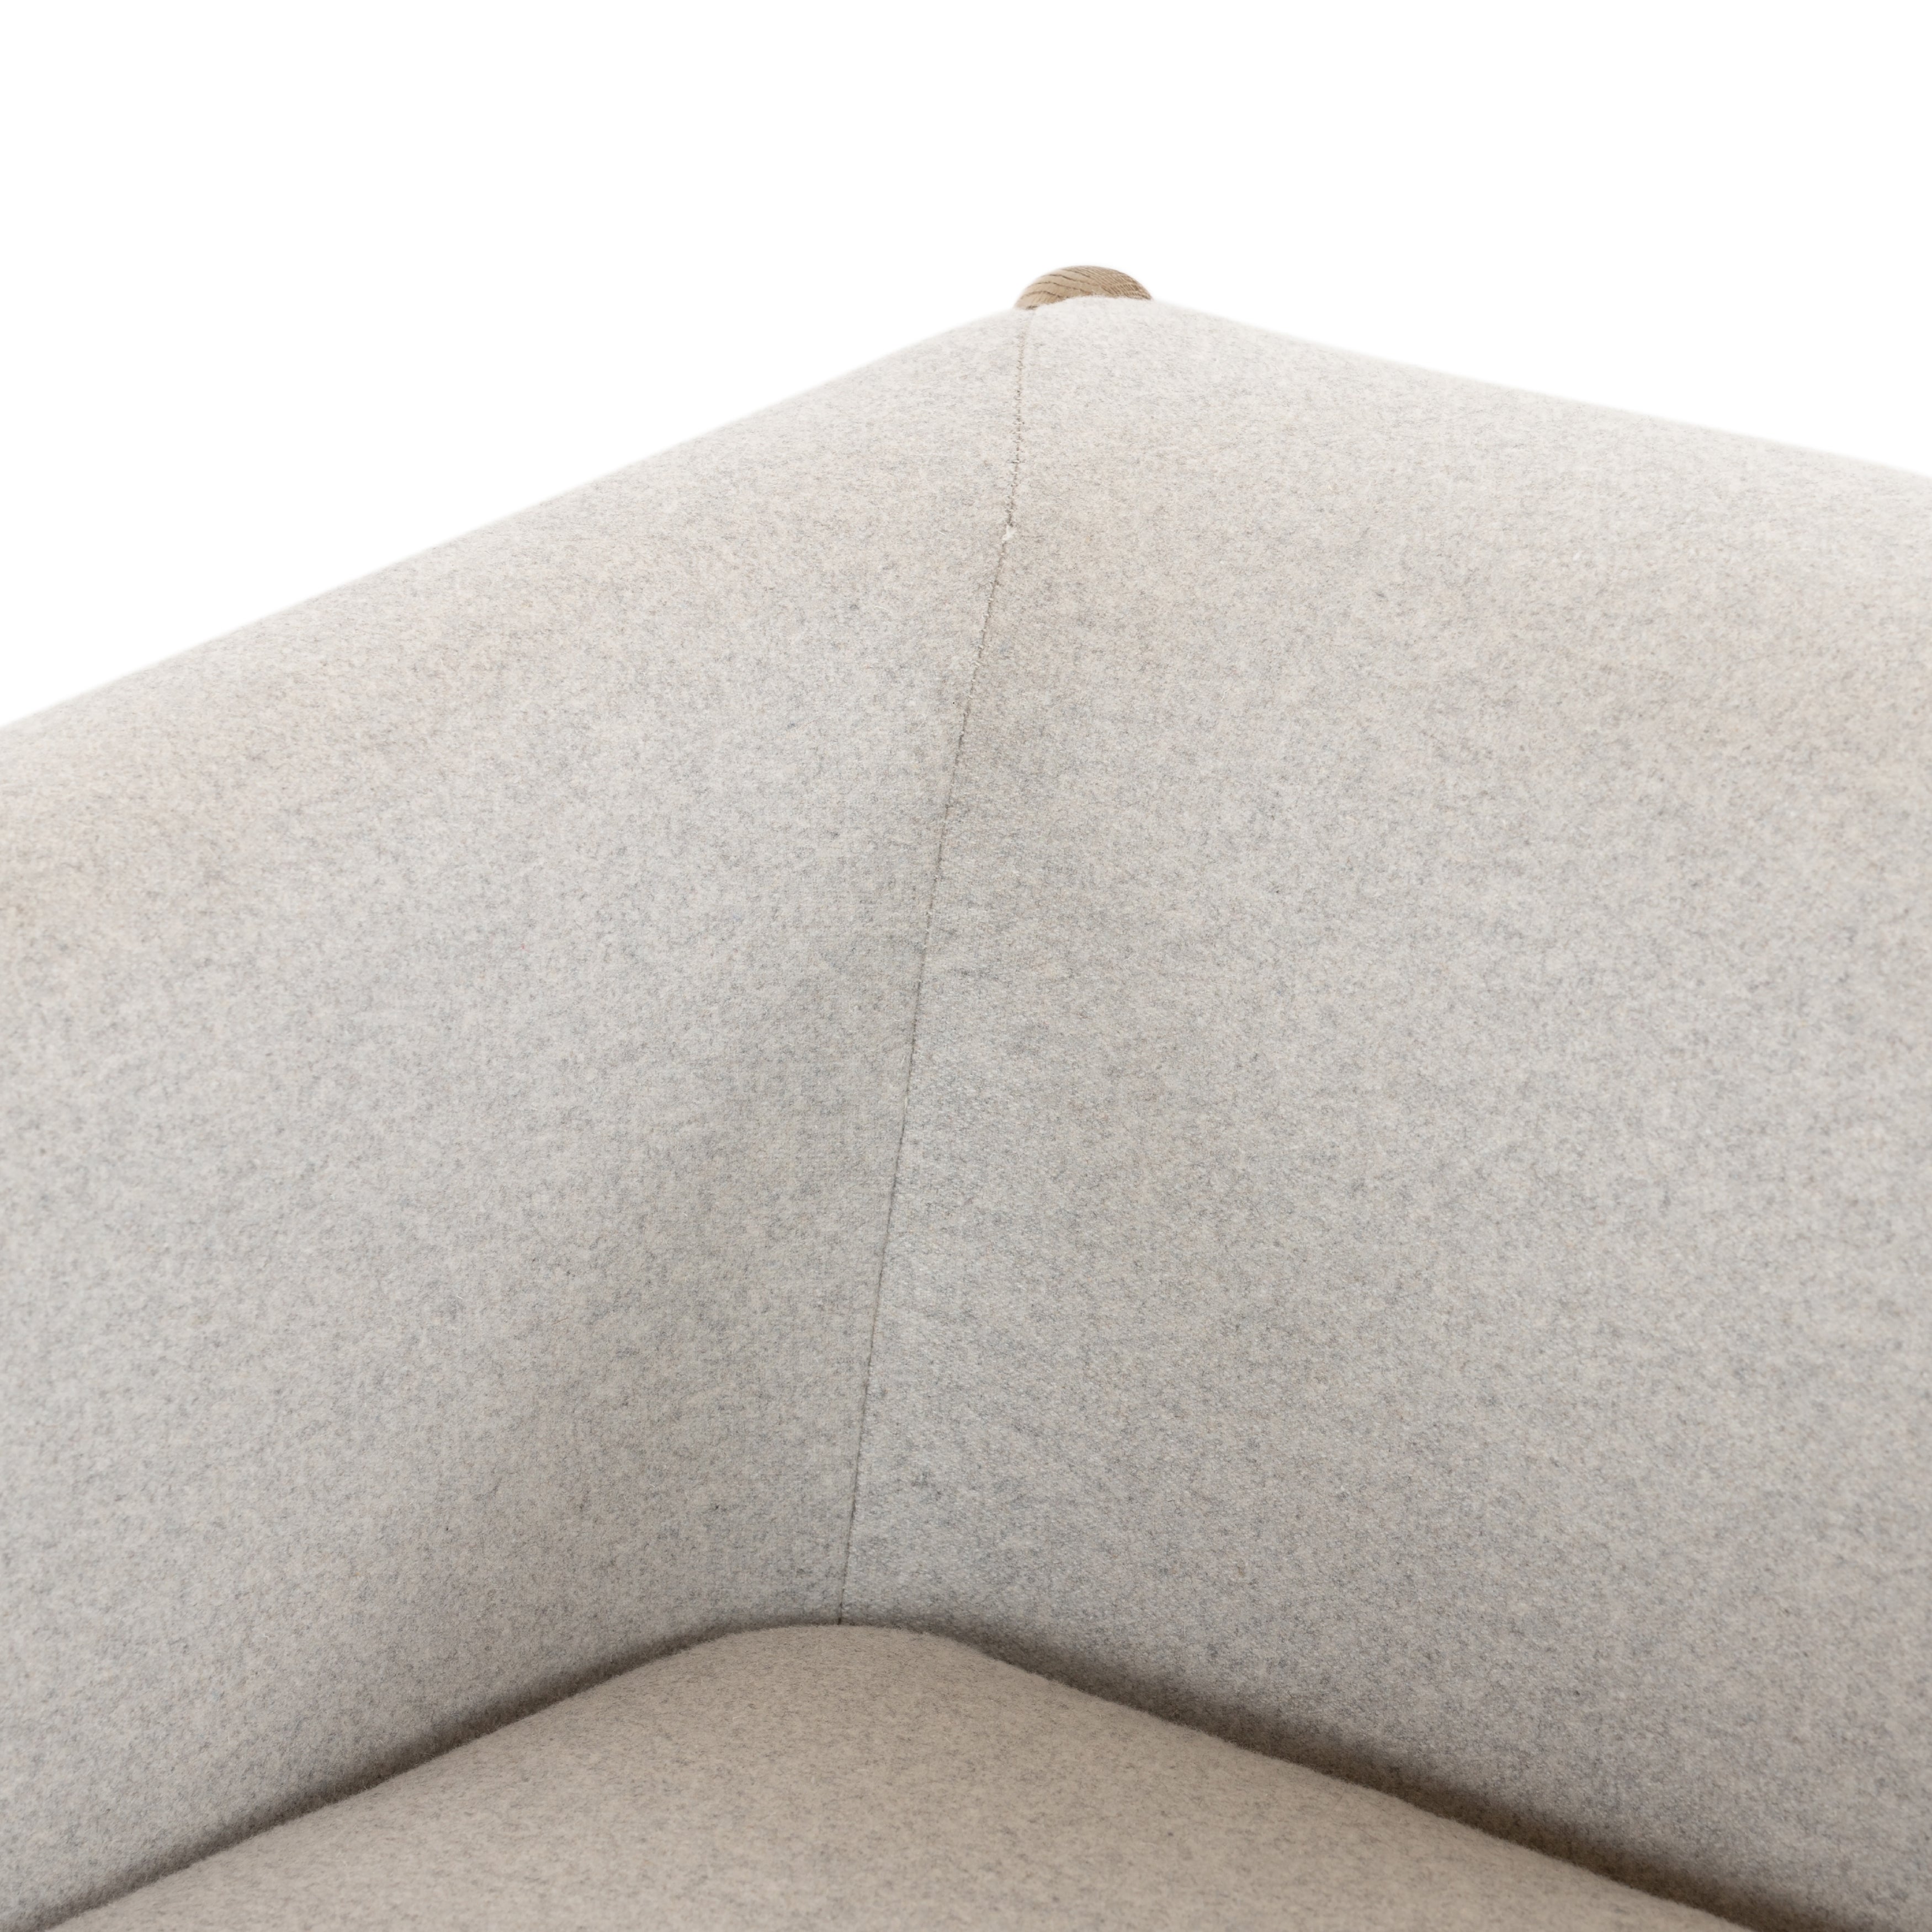 Elite Stone Fabric with Tawny Oak | Idris Chair | Valley Ridge Furniture